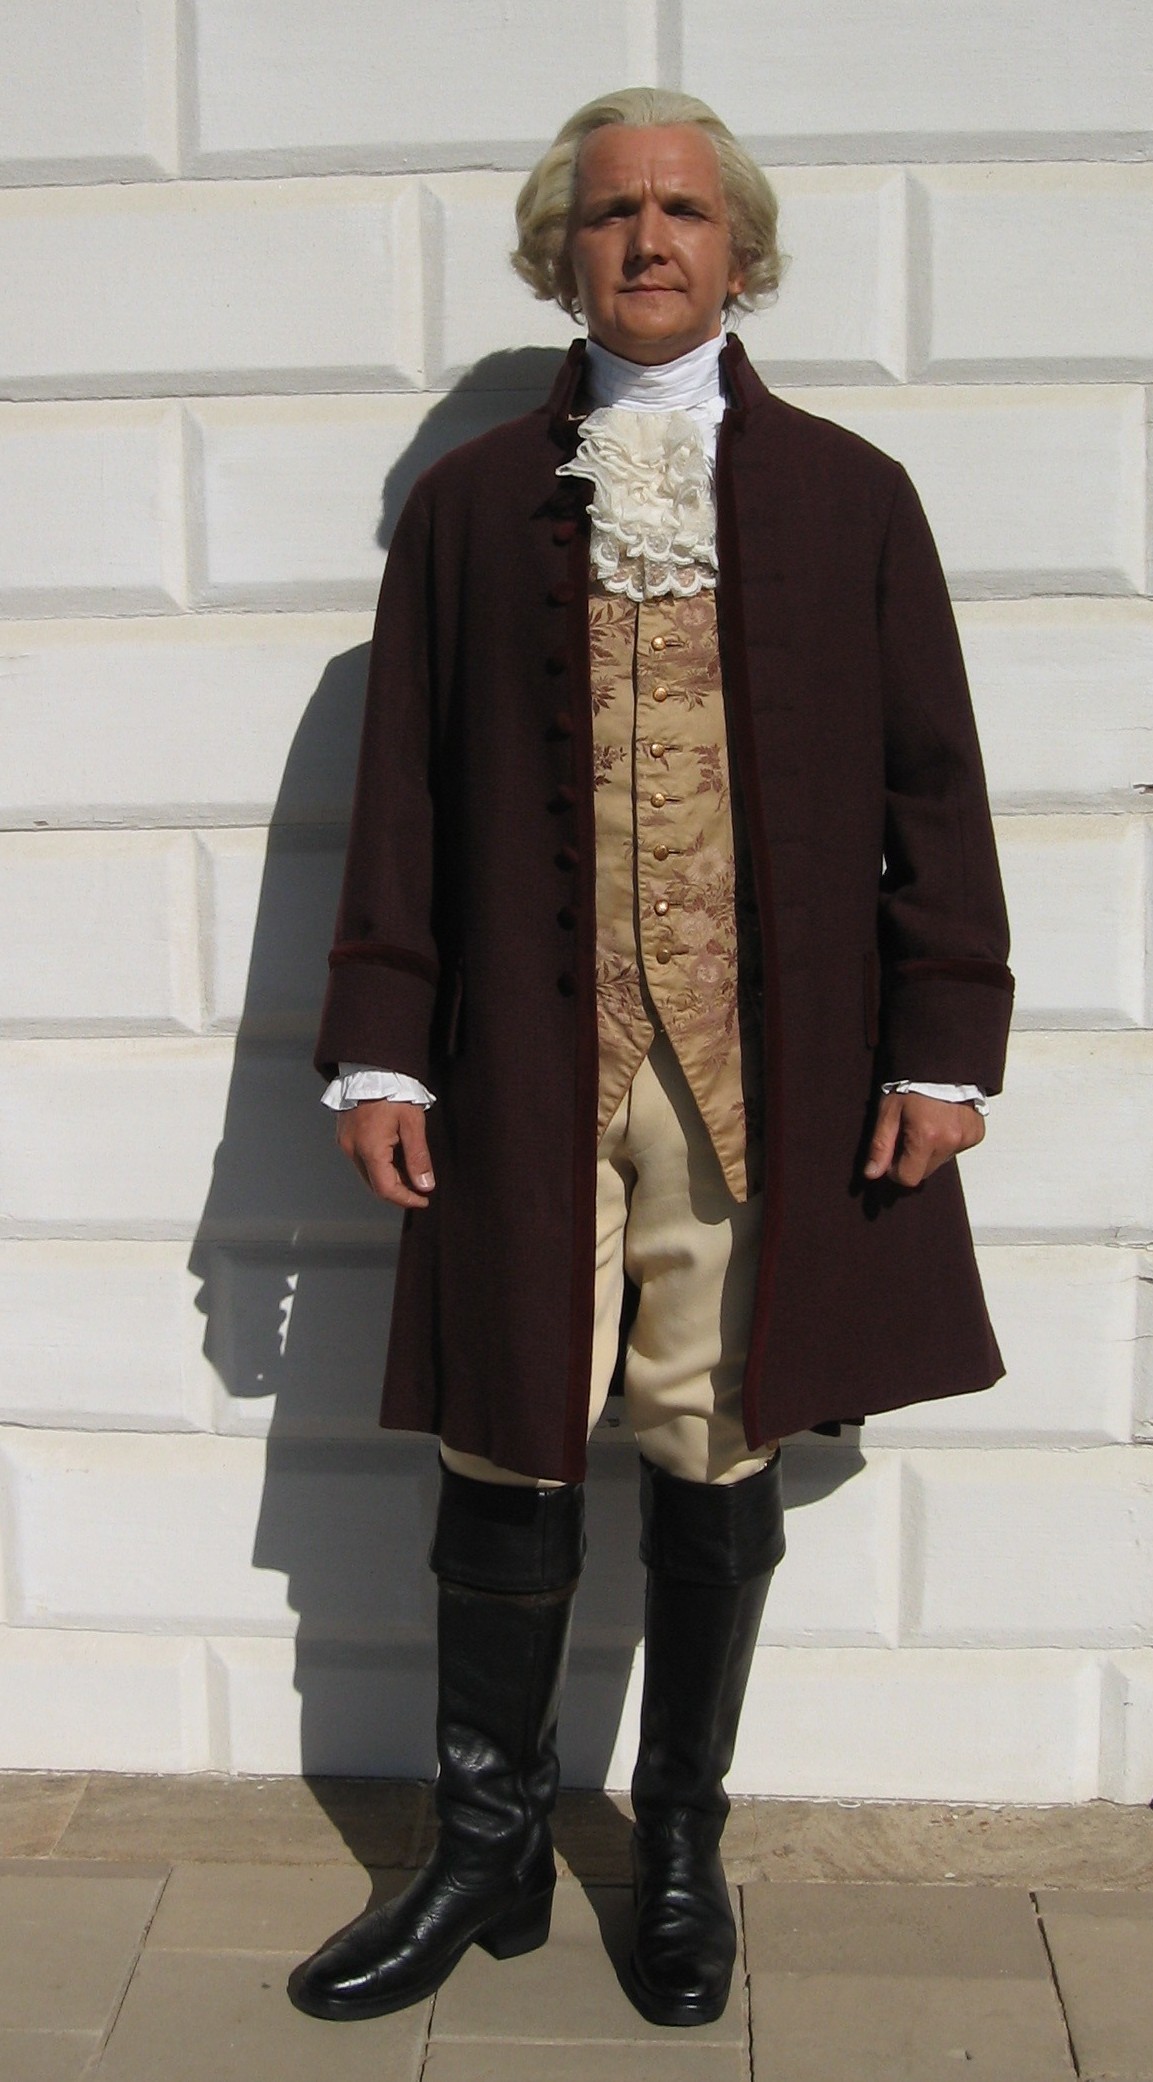 Sebastian Roche as George Washington, 